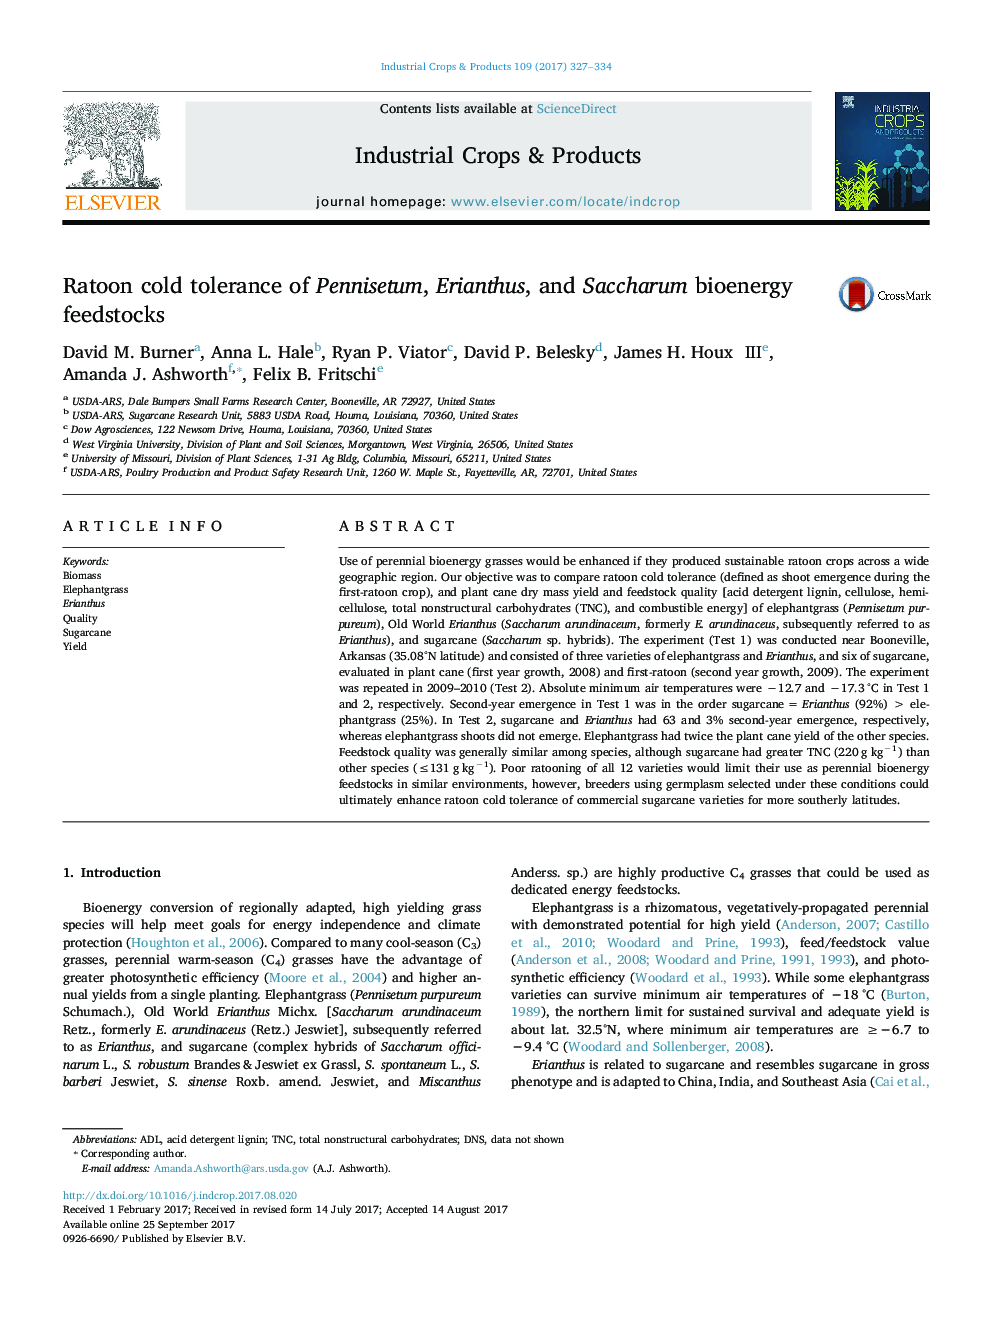 Ratoon cold tolerance of Pennisetum, Erianthus, and Saccharum bioenergy feedstocks